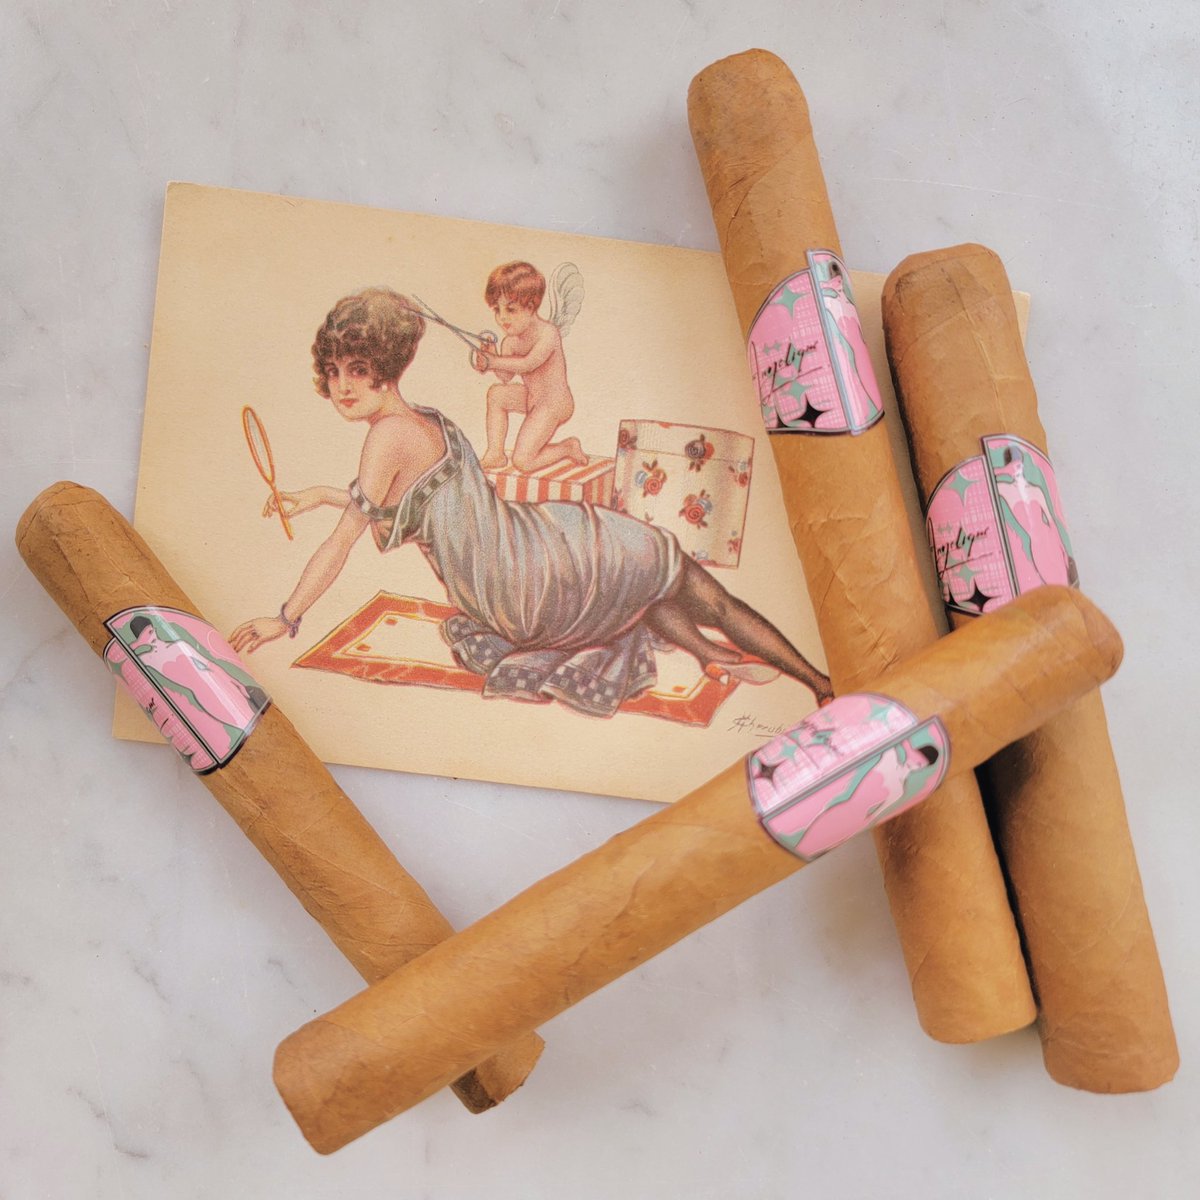 #FlirtyFriday
.
#Risque #Angelique #Cigar #Cigars #PrincipleCigars #시가 #雪茄 #ArtDeco #Zigarre #葉巻 #сигара #Puro #BOTL #SOTL #Cerutu #PinupGirl #CigarLife #Pink #CigarWorld #CigarOfTheDay #CigarStyle #CigarLover #VintagePostcard